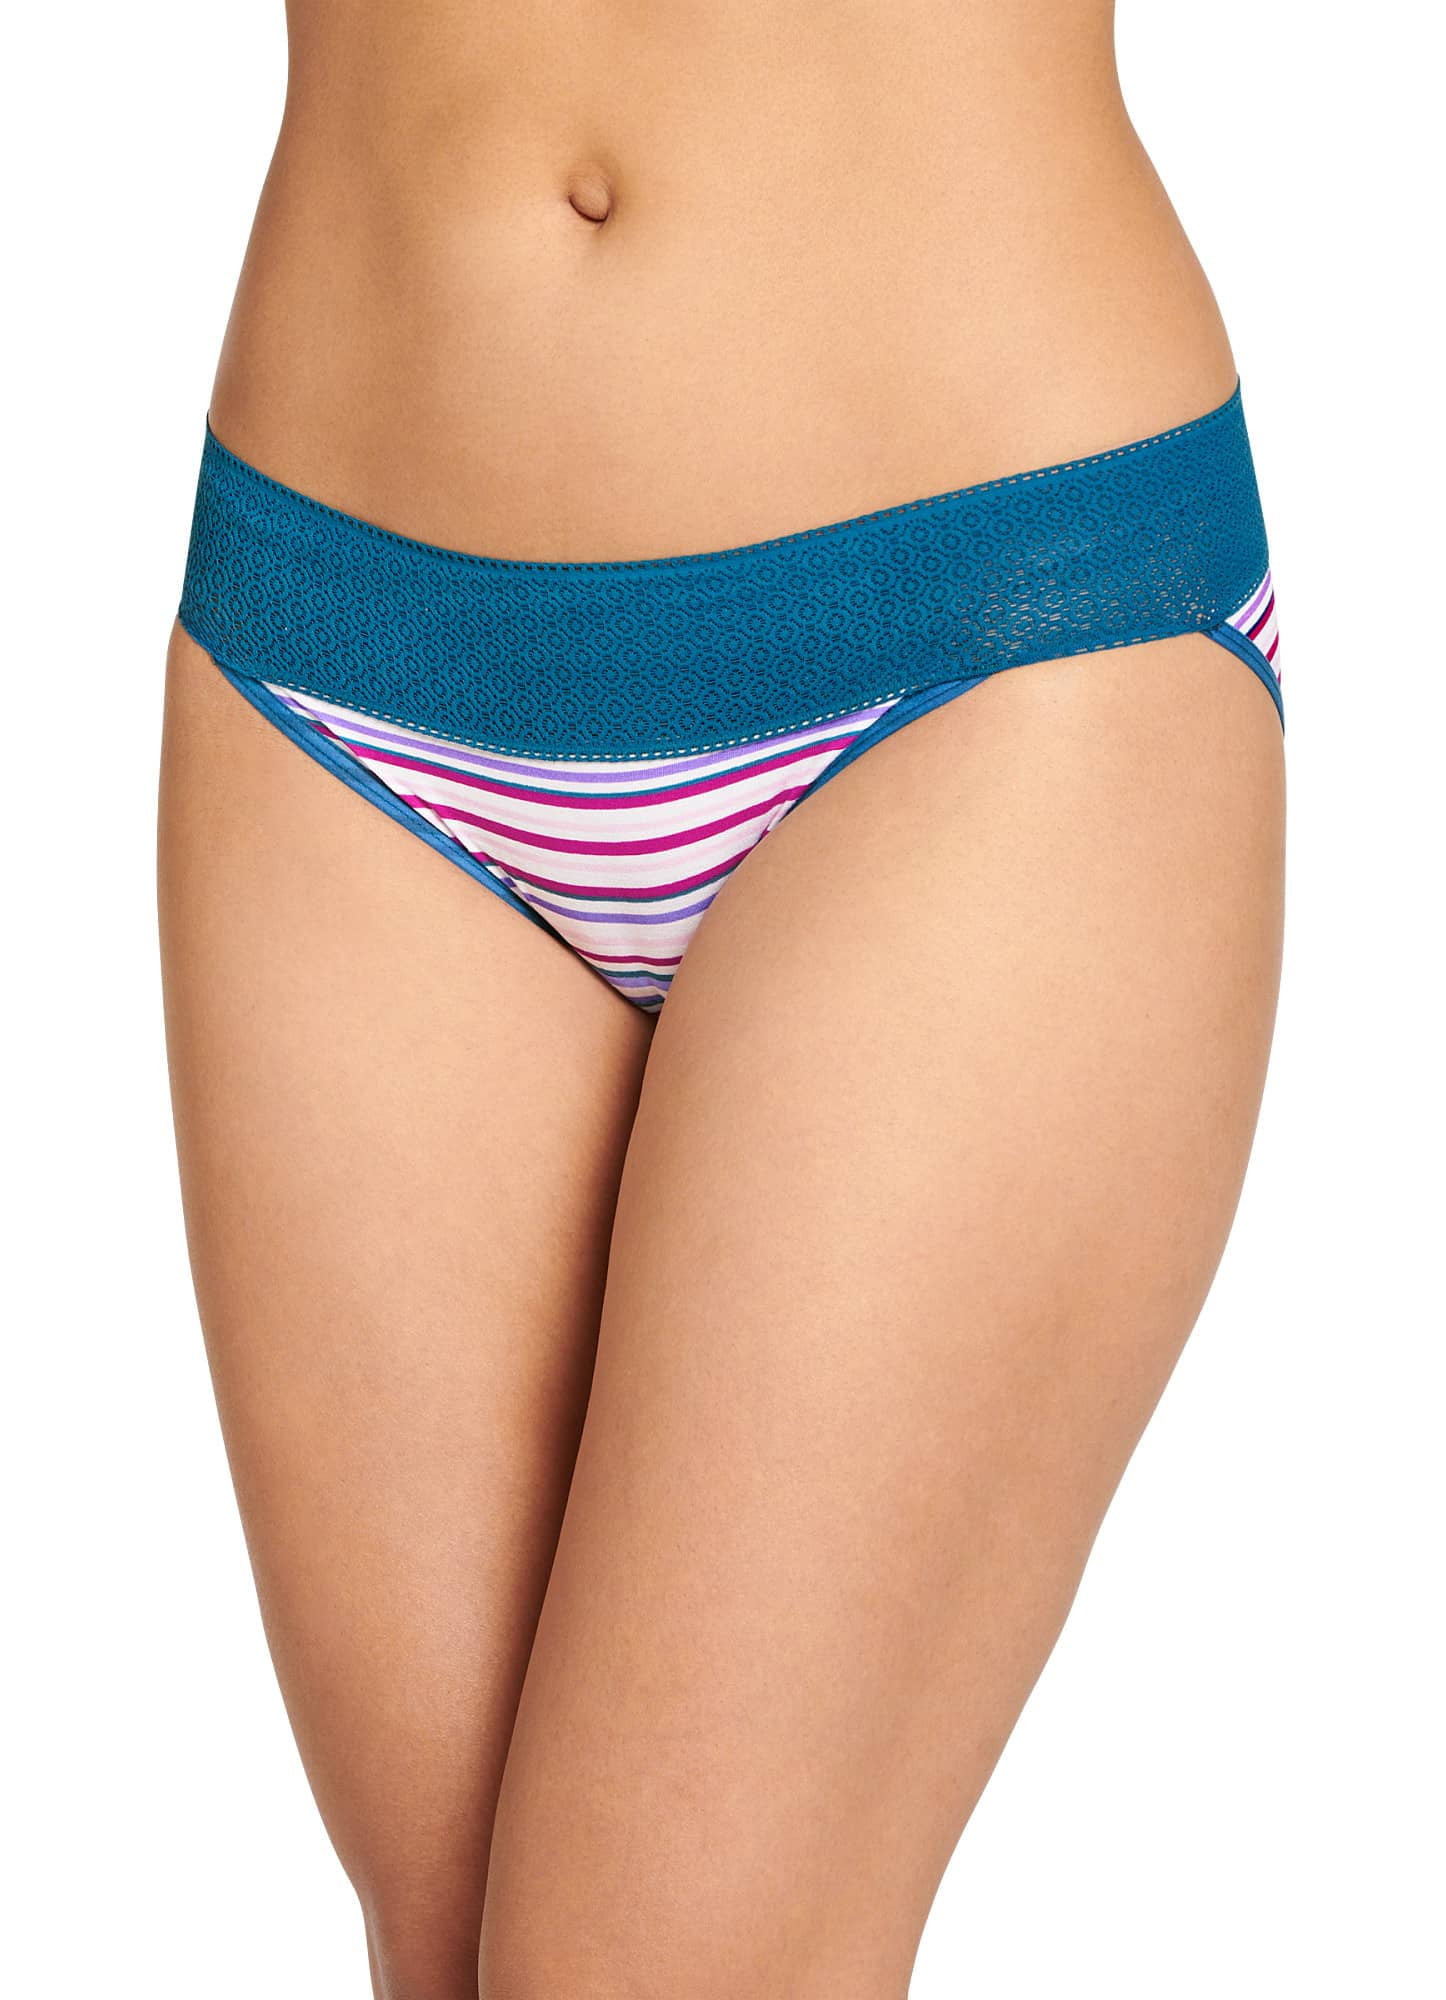 Jockey Generation™ Women's Soft Touch Logo String Bikini Underwear -  Burgundy Blush S